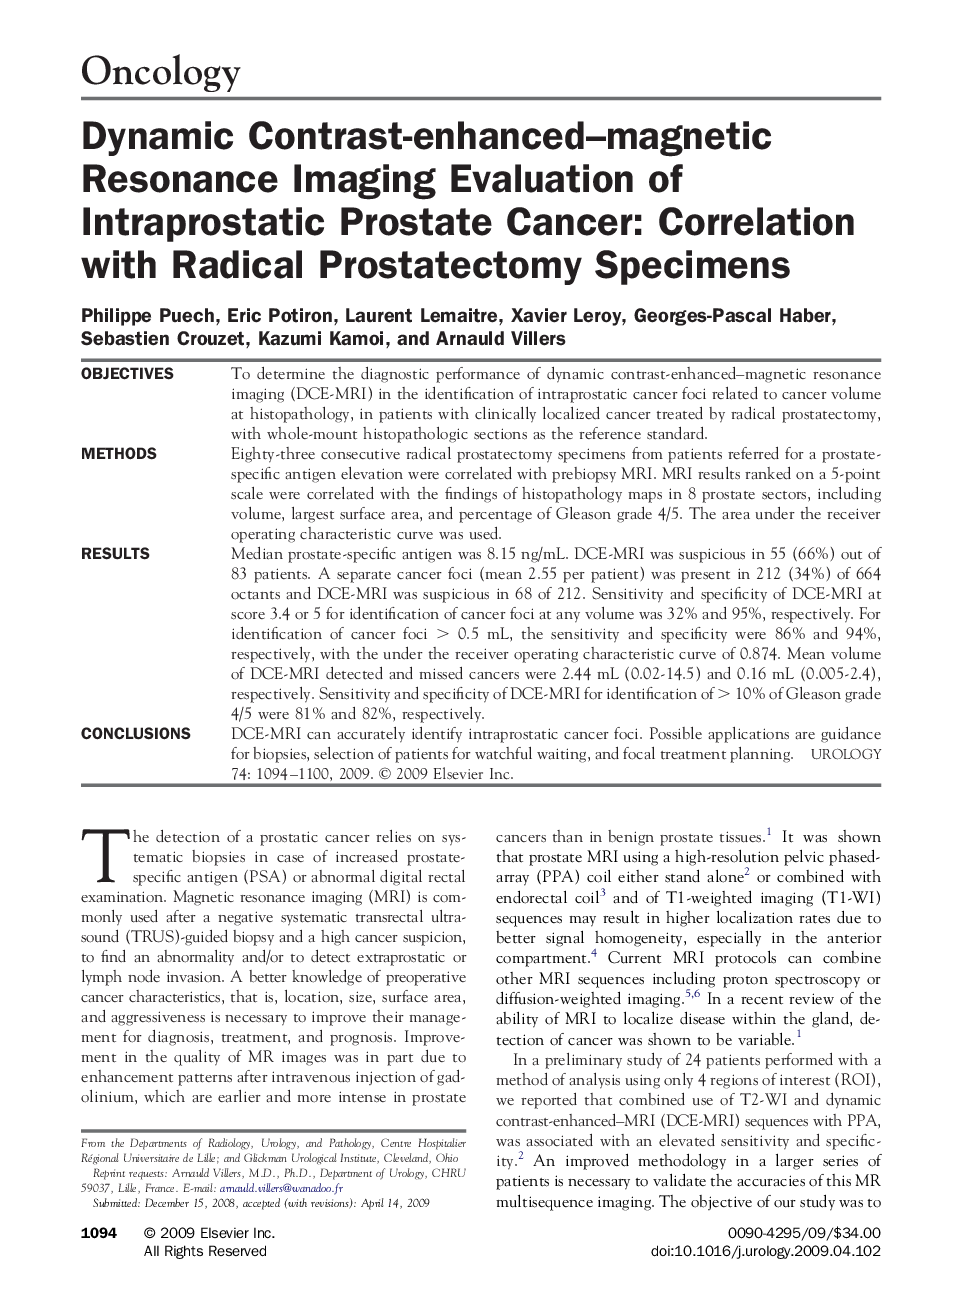 Dynamic Contrast-enhanced–magnetic Resonance Imaging Evaluation of Intraprostatic Prostate Cancer: Correlation with Radical Prostatectomy Specimens